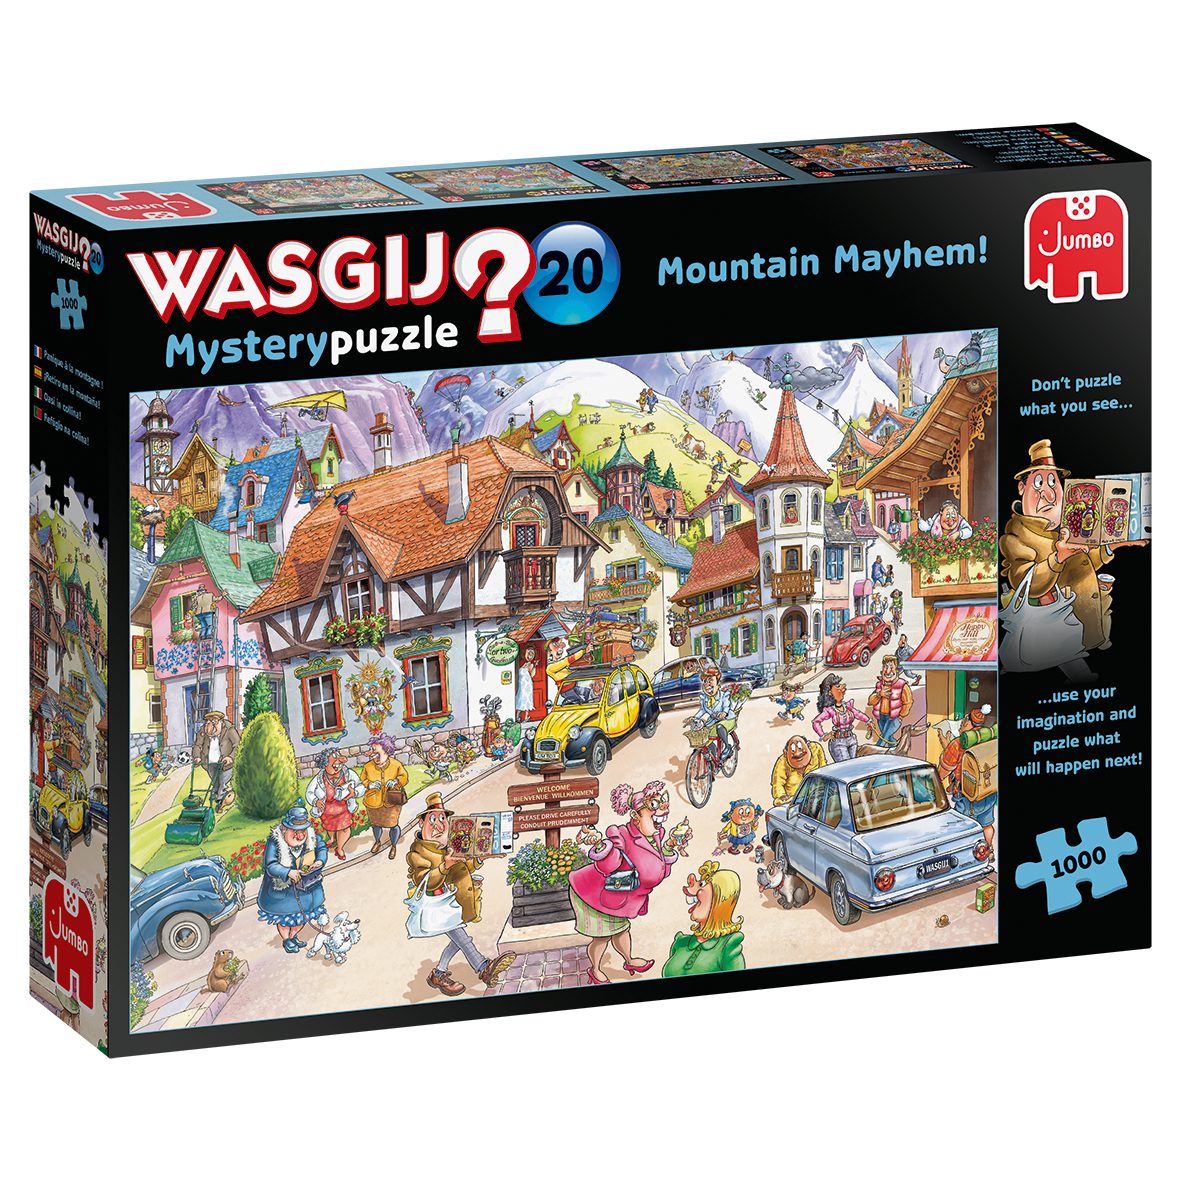 Jumbo Spiele Puzzle 25002 Wasgij Mystery 20 - Idylle in den Bergen!, 1000 Puzzleteile